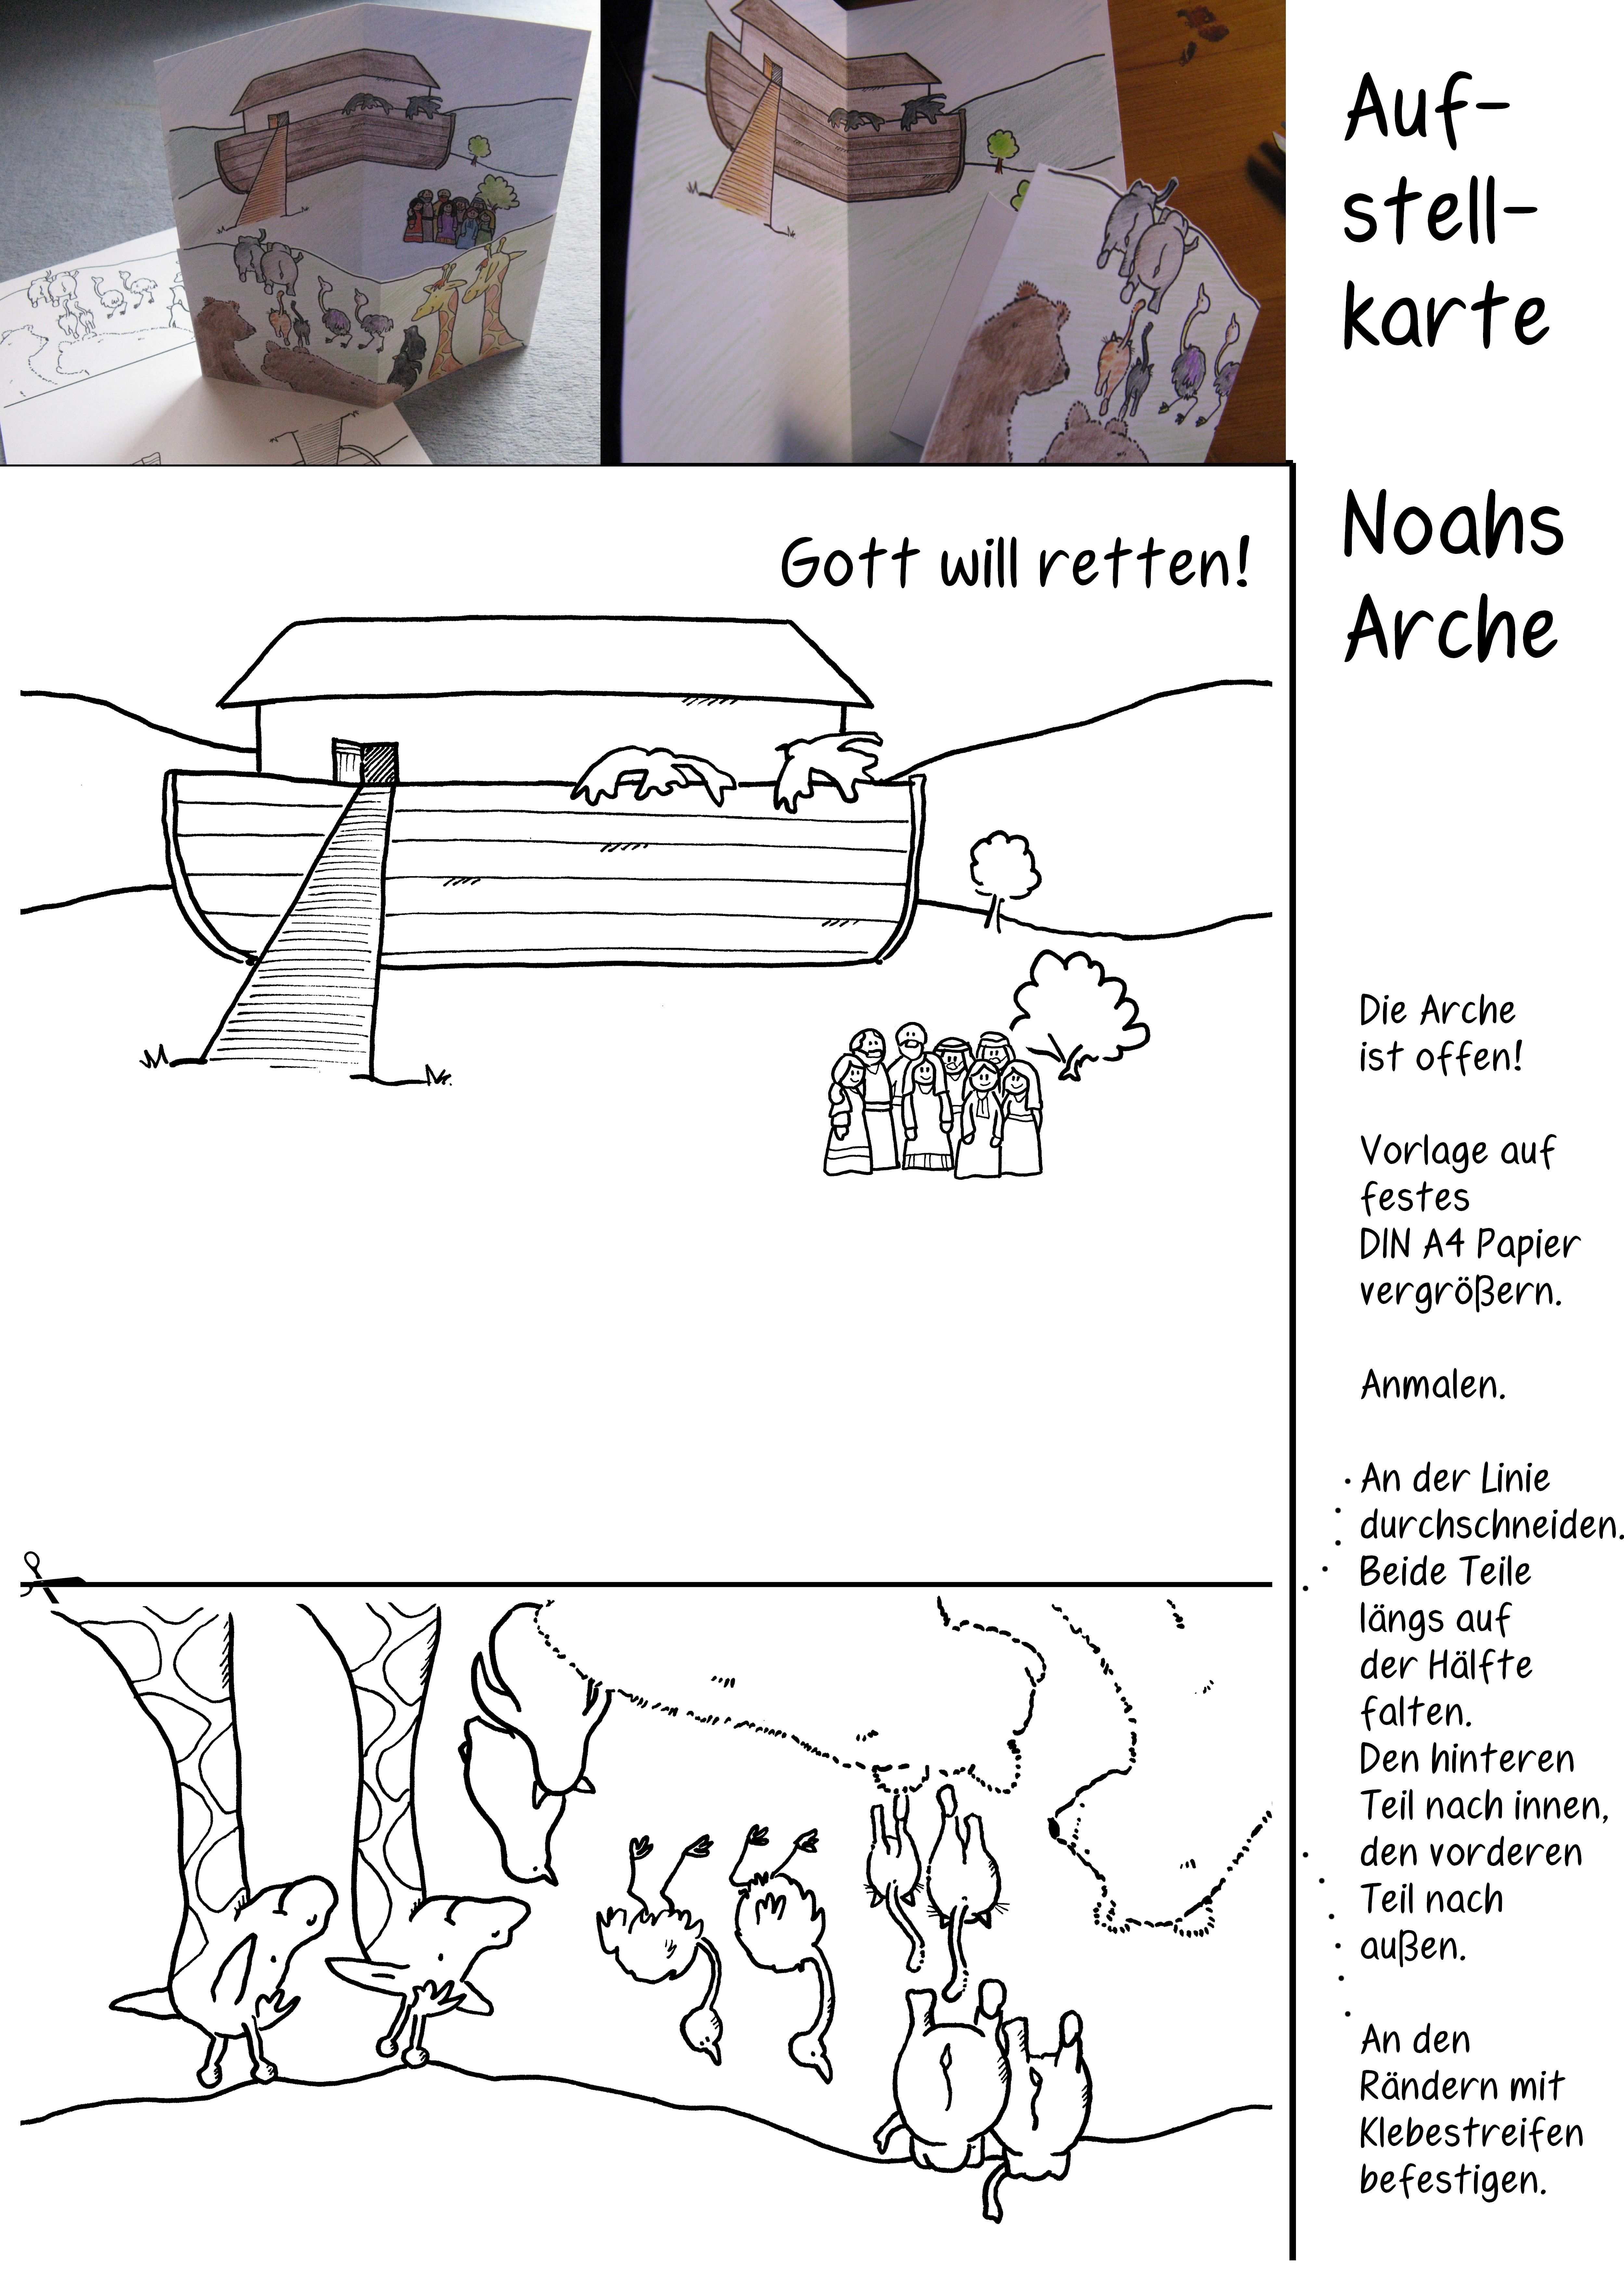 Noahs Arche Sintflut Aufstellkarte Basteln Zur Geschichte Bibelgeschichten Basteln Bibel Fur Kinder Bibel Geschichten